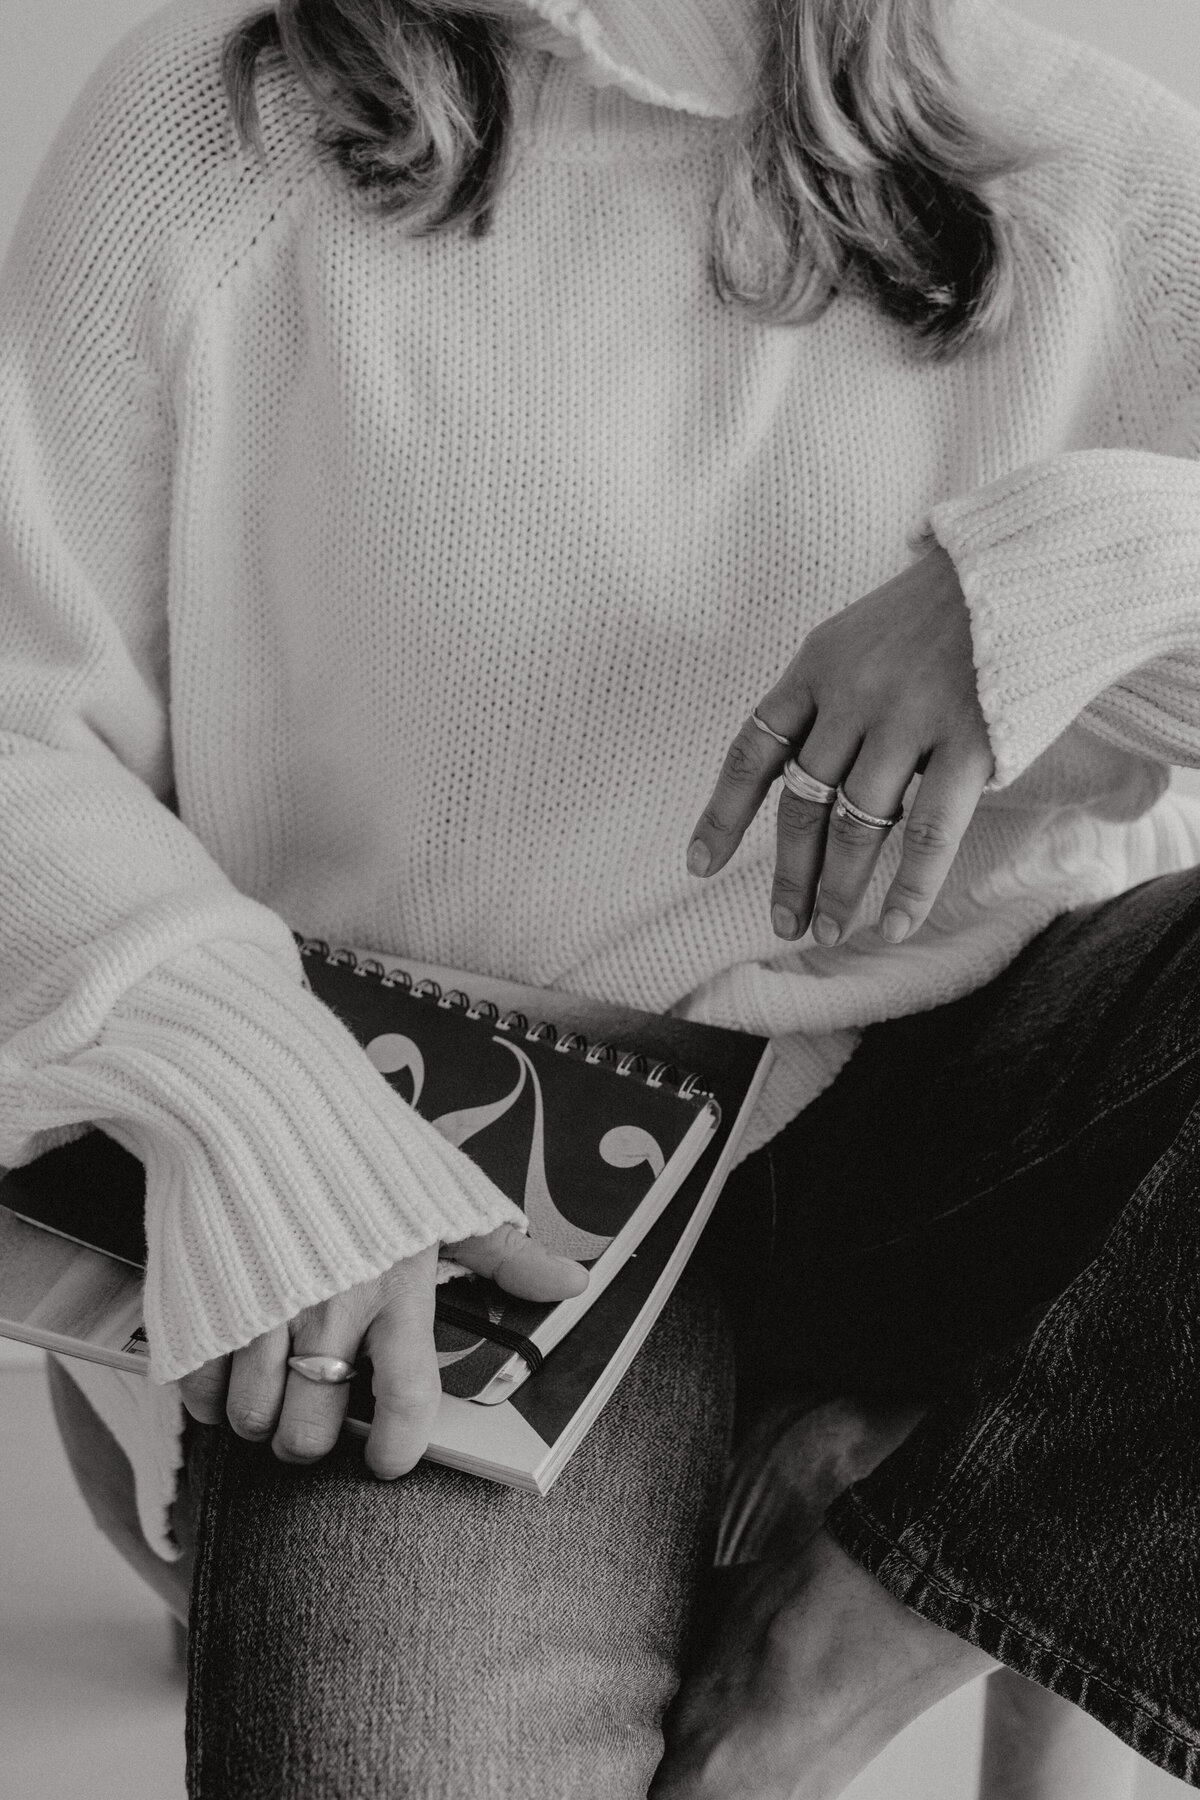 kaboompics_woman-in-a-white-sweater-jewelry-laptop-work-fashion-29460